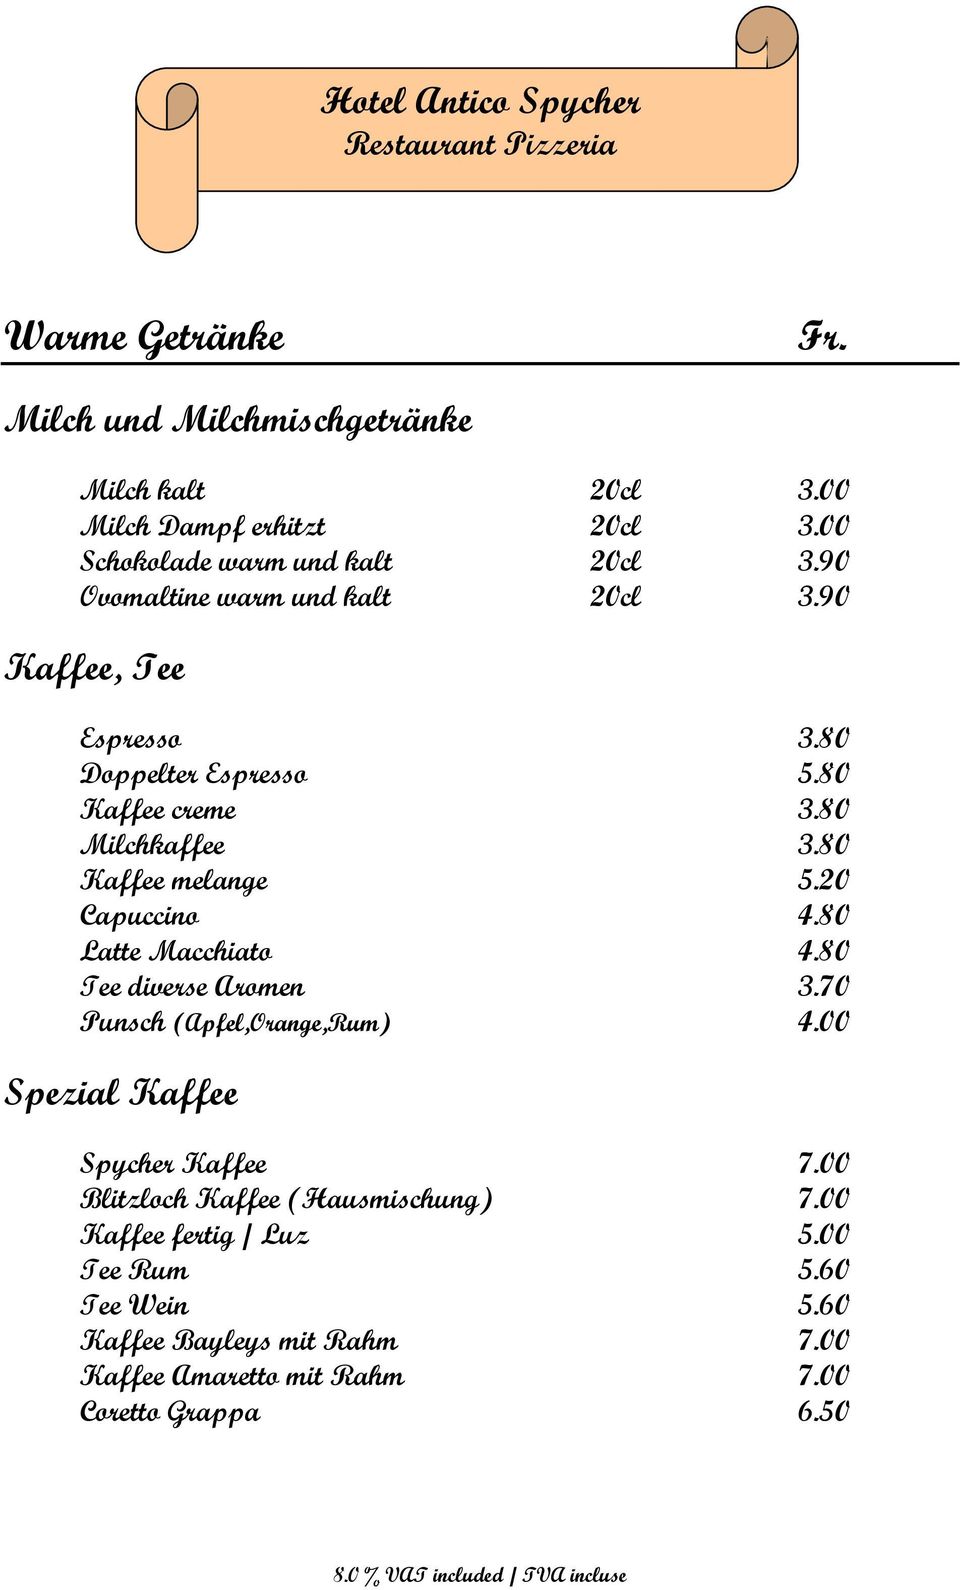 20 Capuccino 4.80 Latte Macchiato 4.80 Tee diverse Aromen 3.70 Punsch (Apfel,Orange,Rum) 4.00 Spezial Kaffee Spycher Kaffee 7.